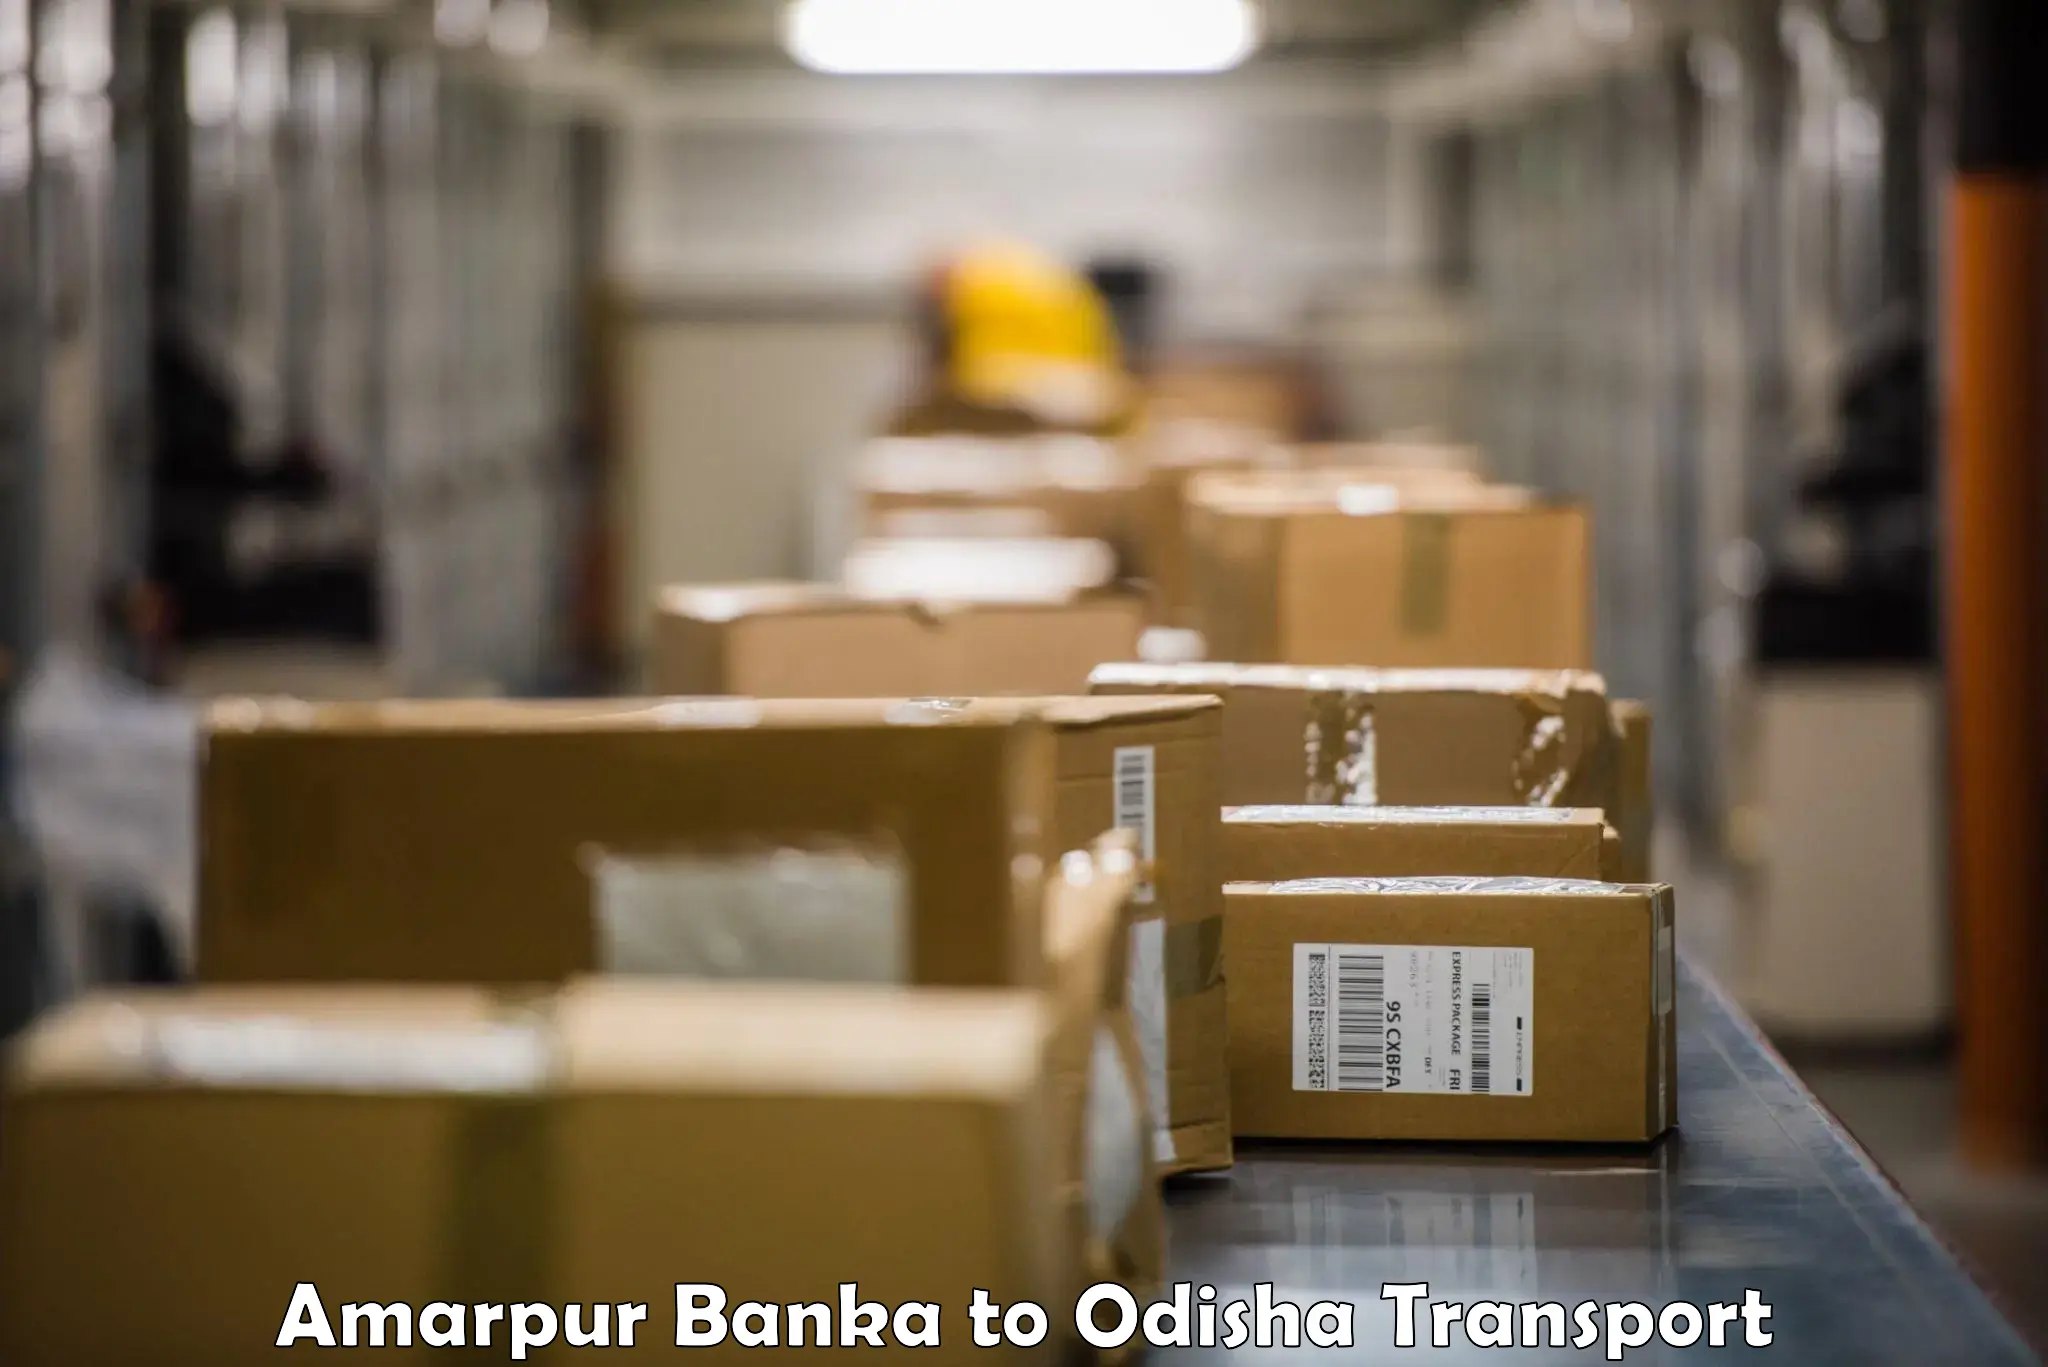 Goods delivery service Amarpur Banka to Chandikhol